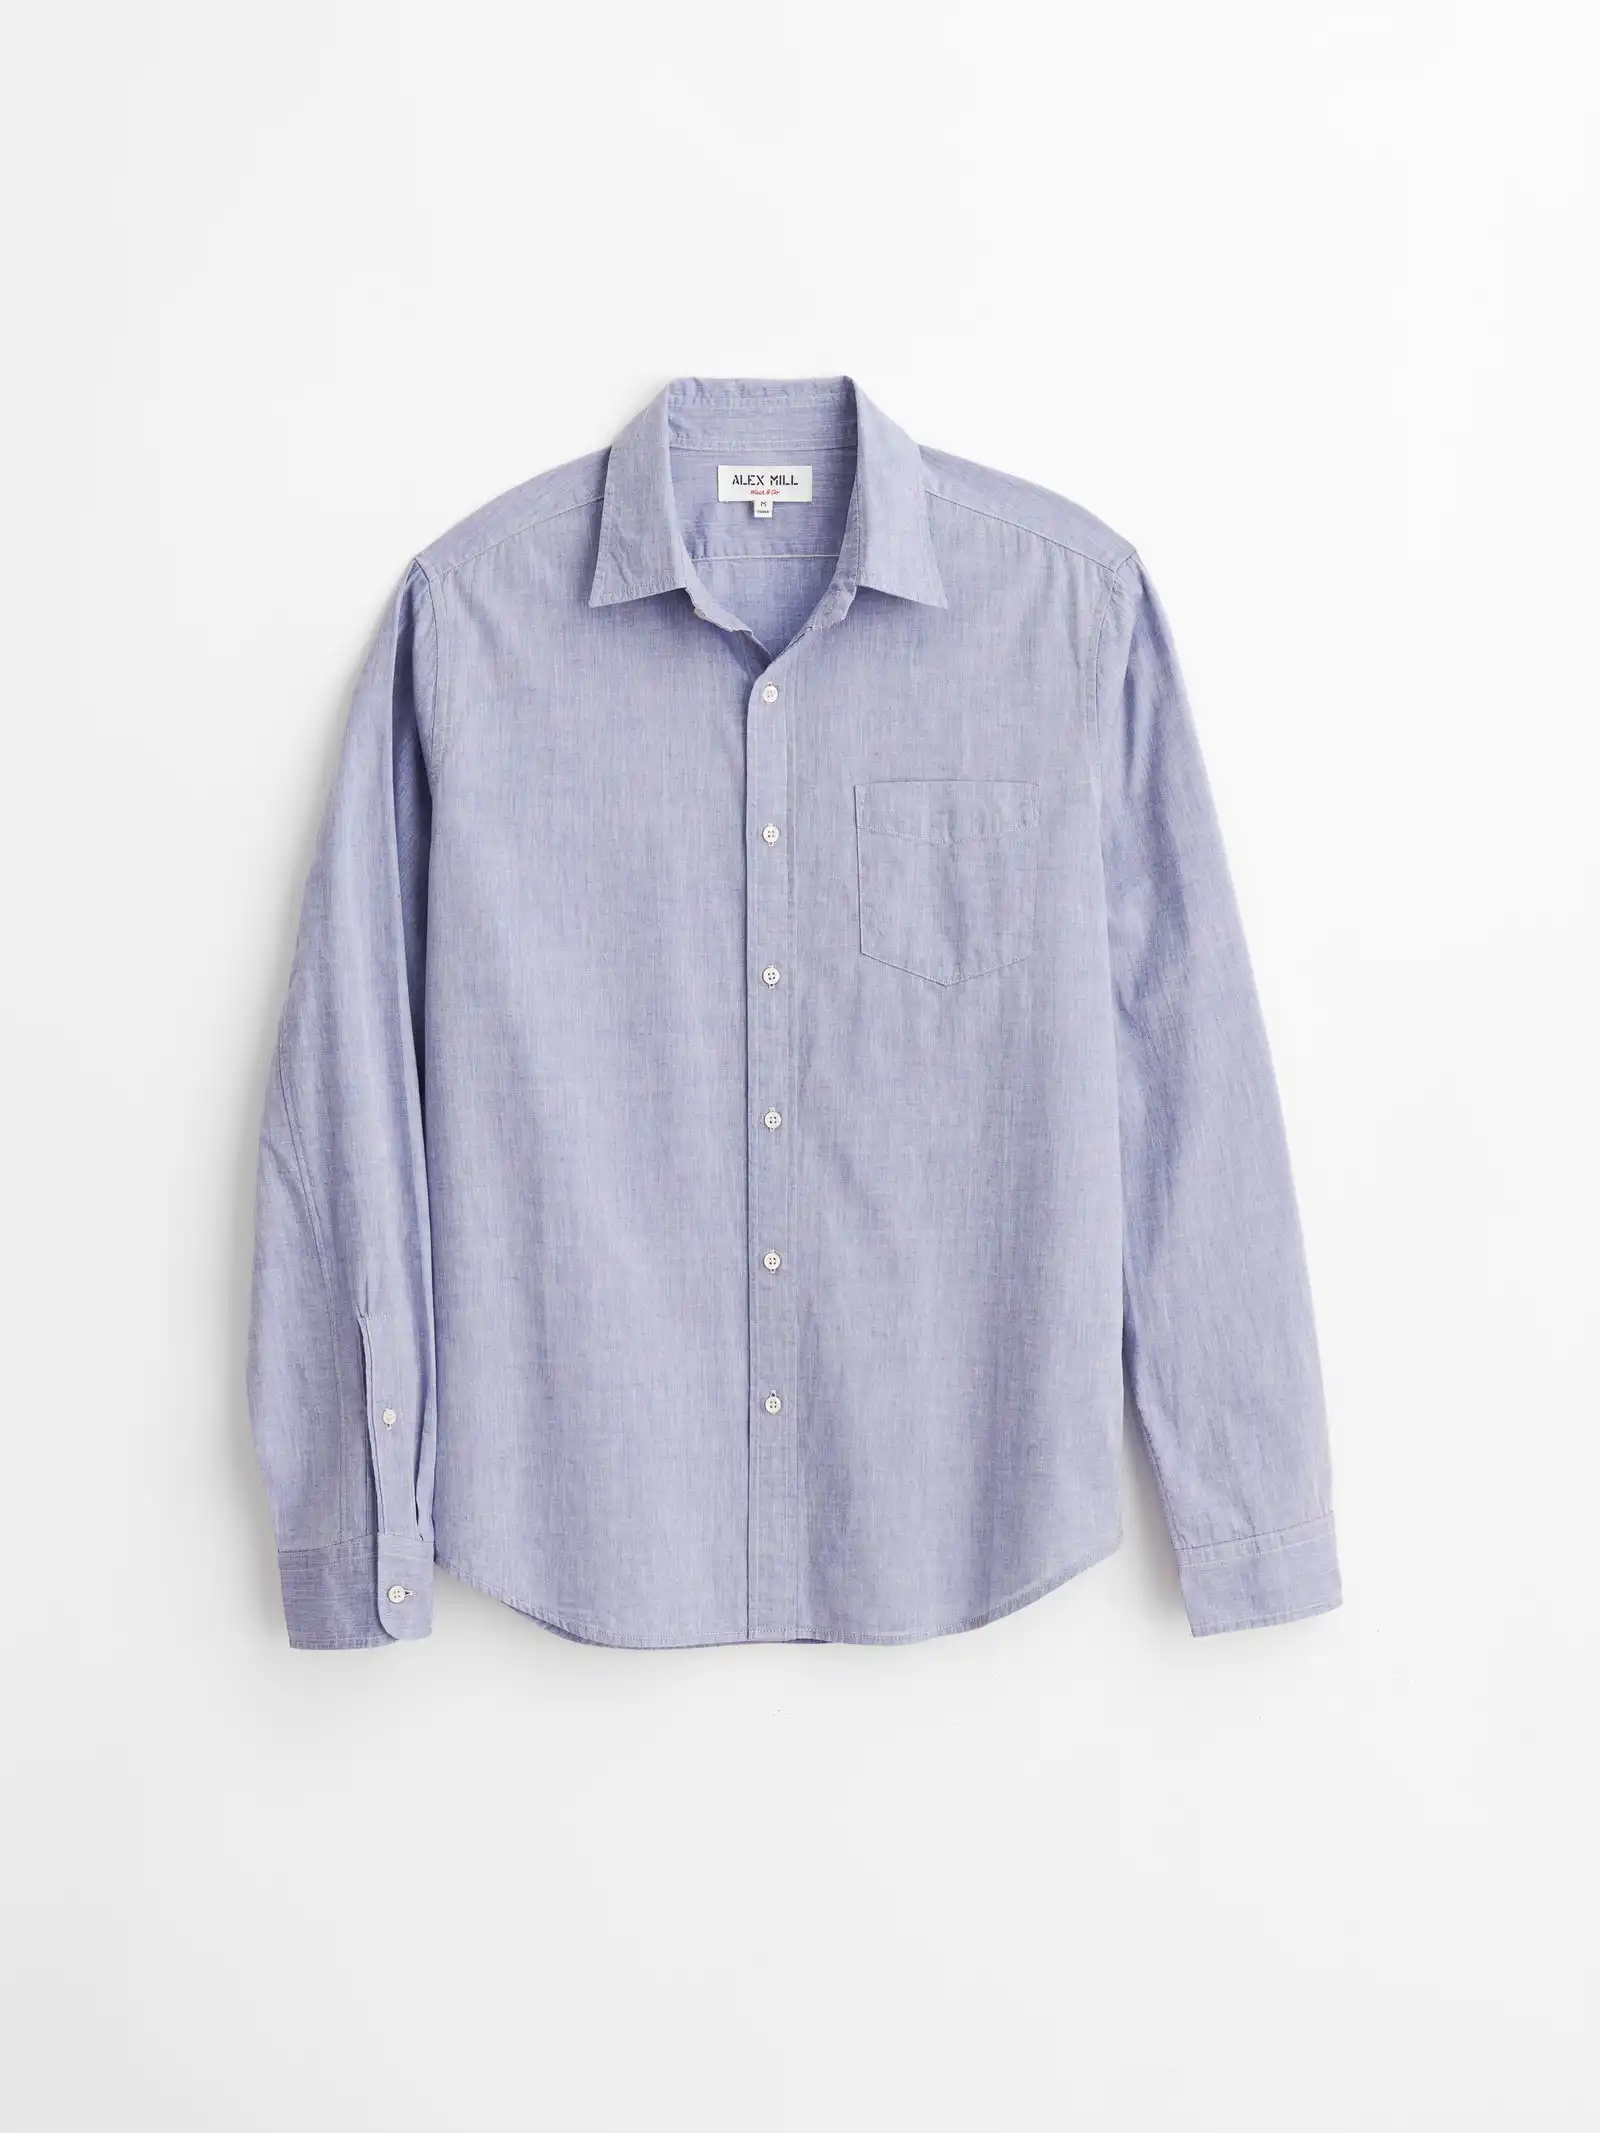 Alex Mill Shirt in Japanese Cotton